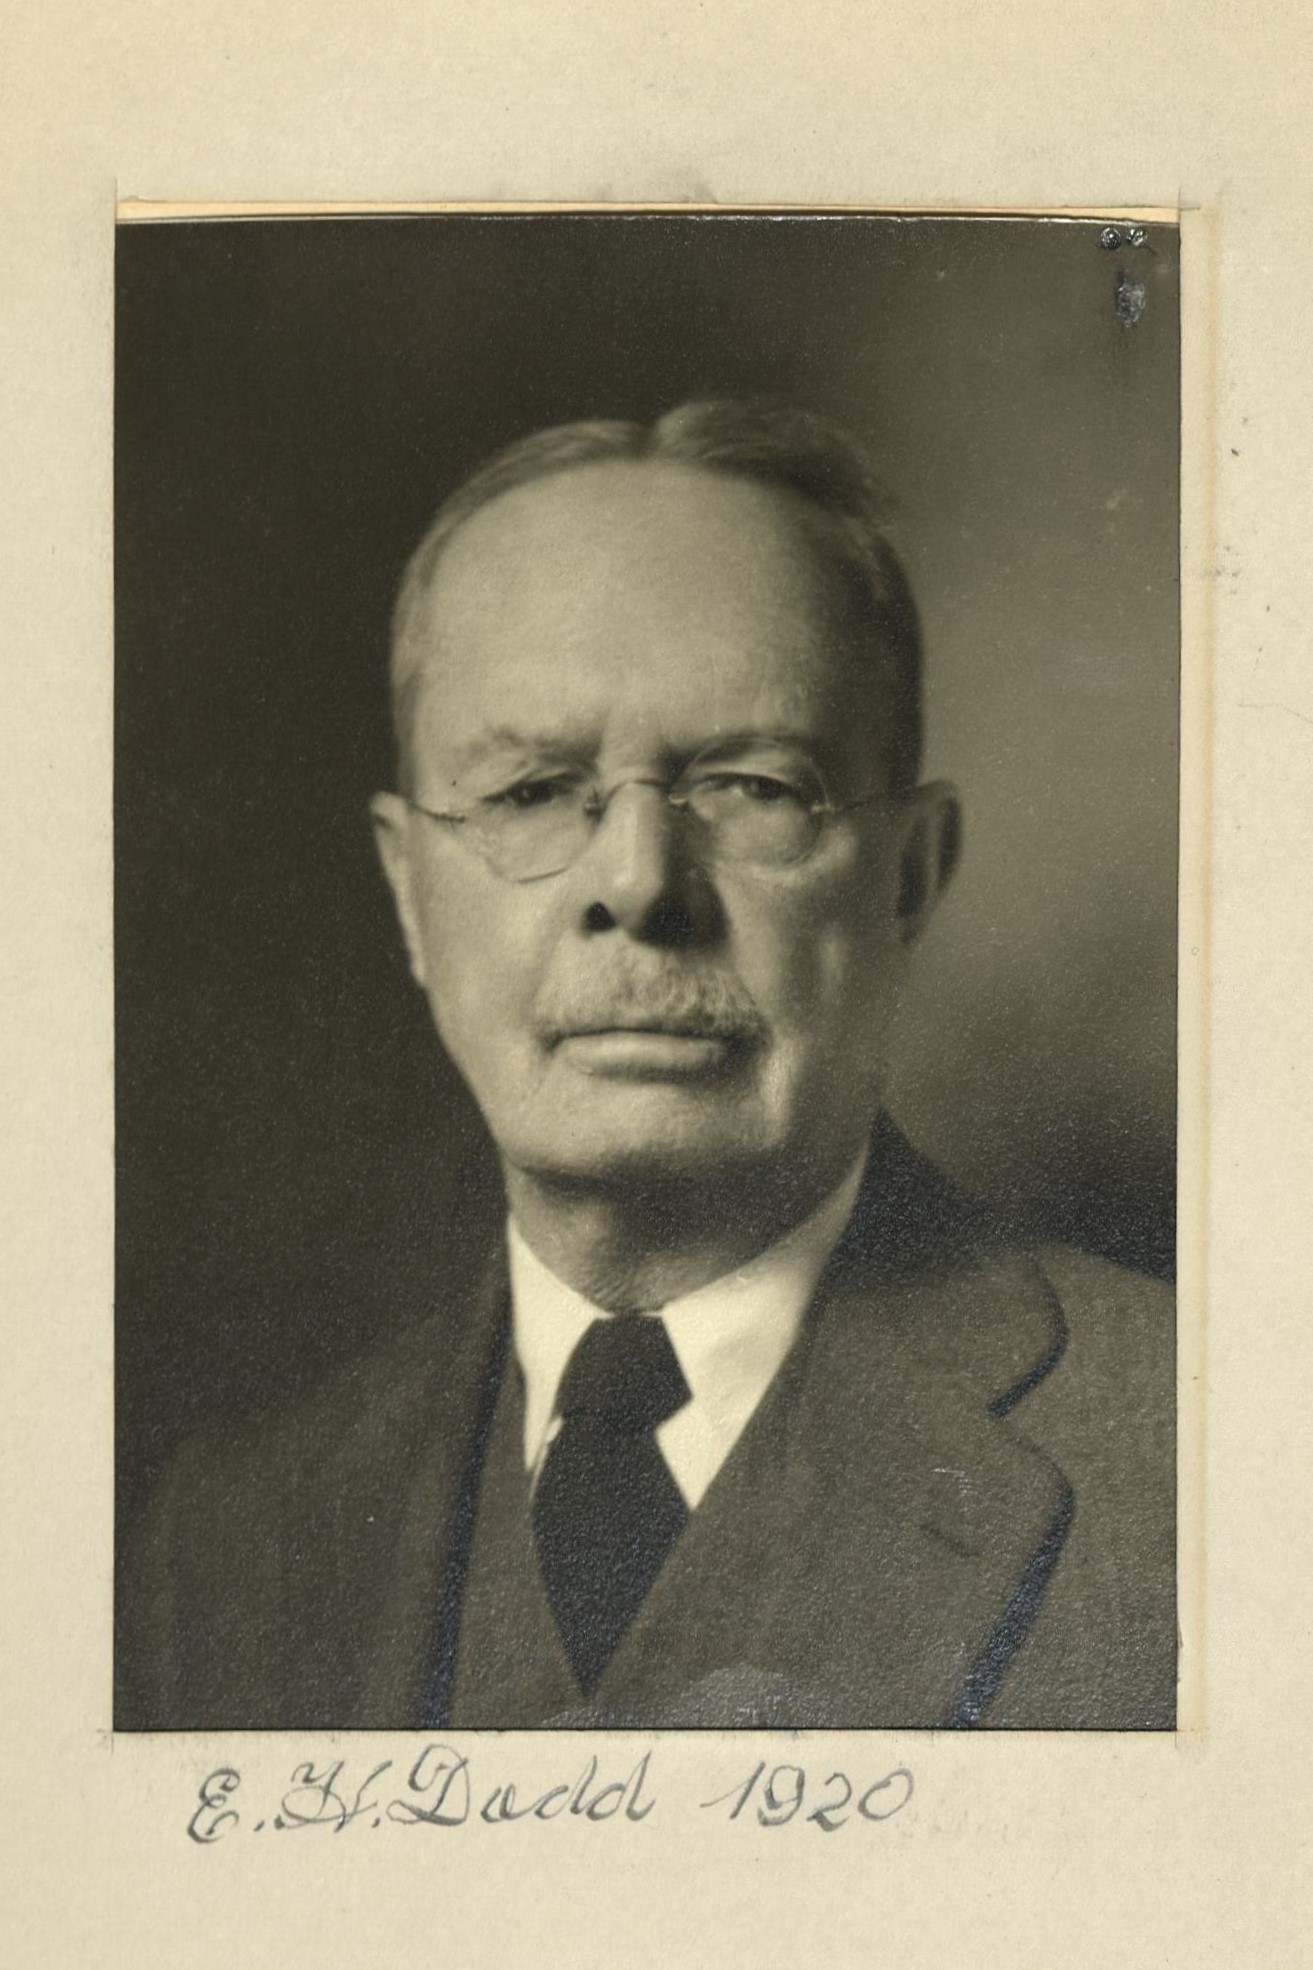 Member portrait of Edward H. Dodd